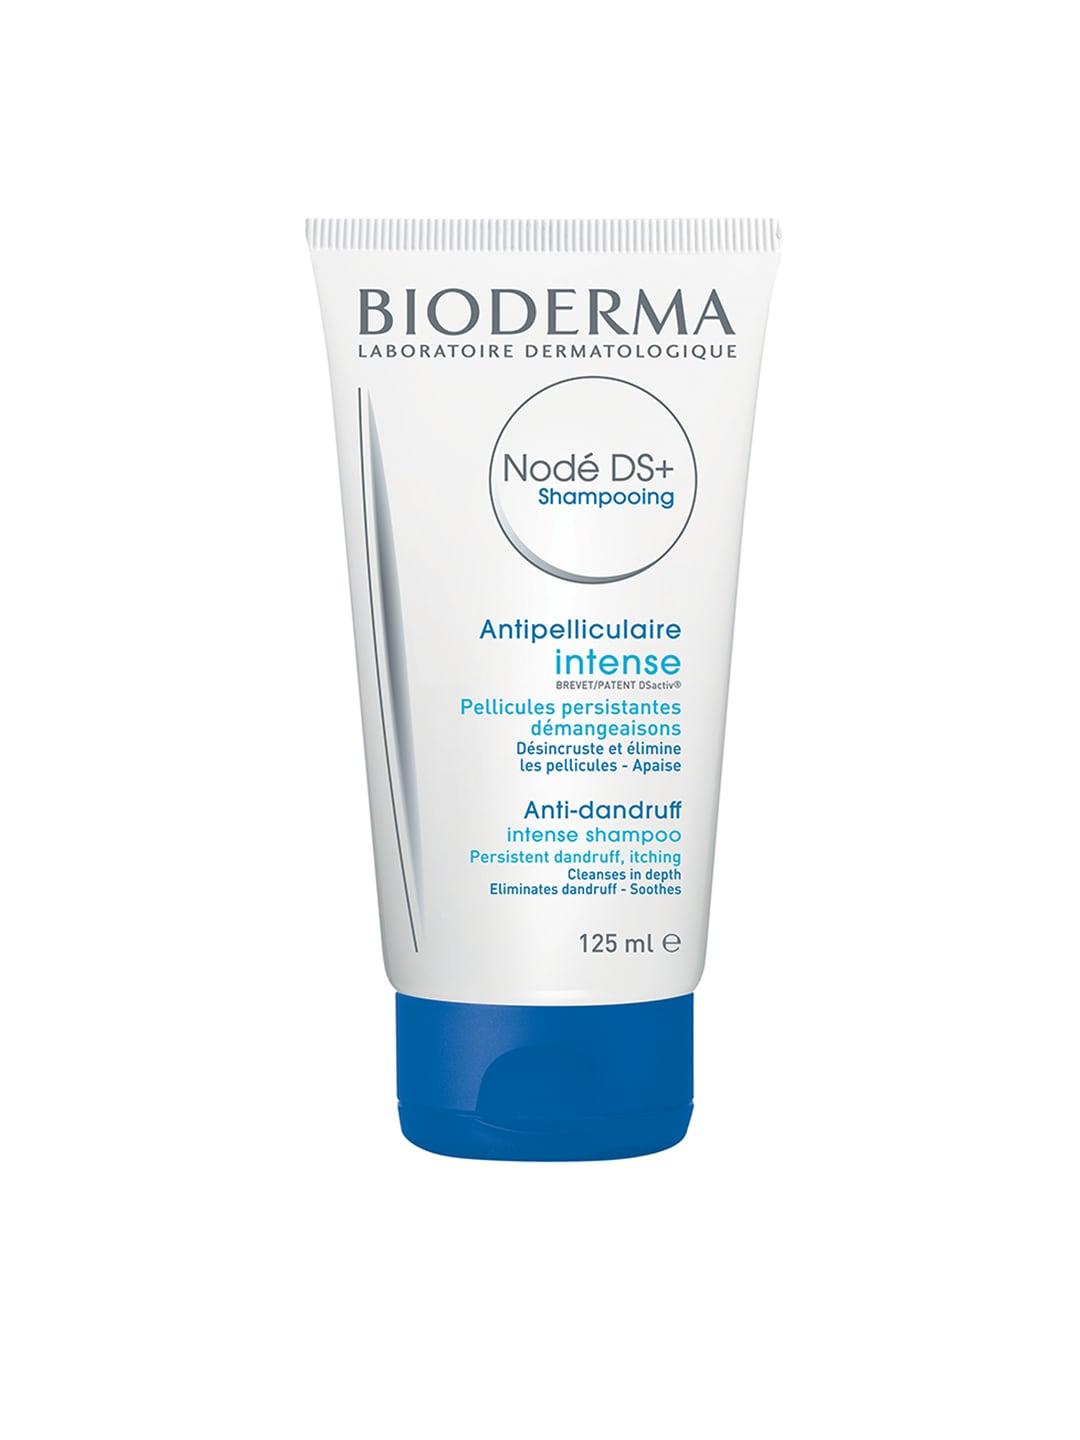 BIODERMA Node DS+ Anti-Dandruff Shampoo 125 ml